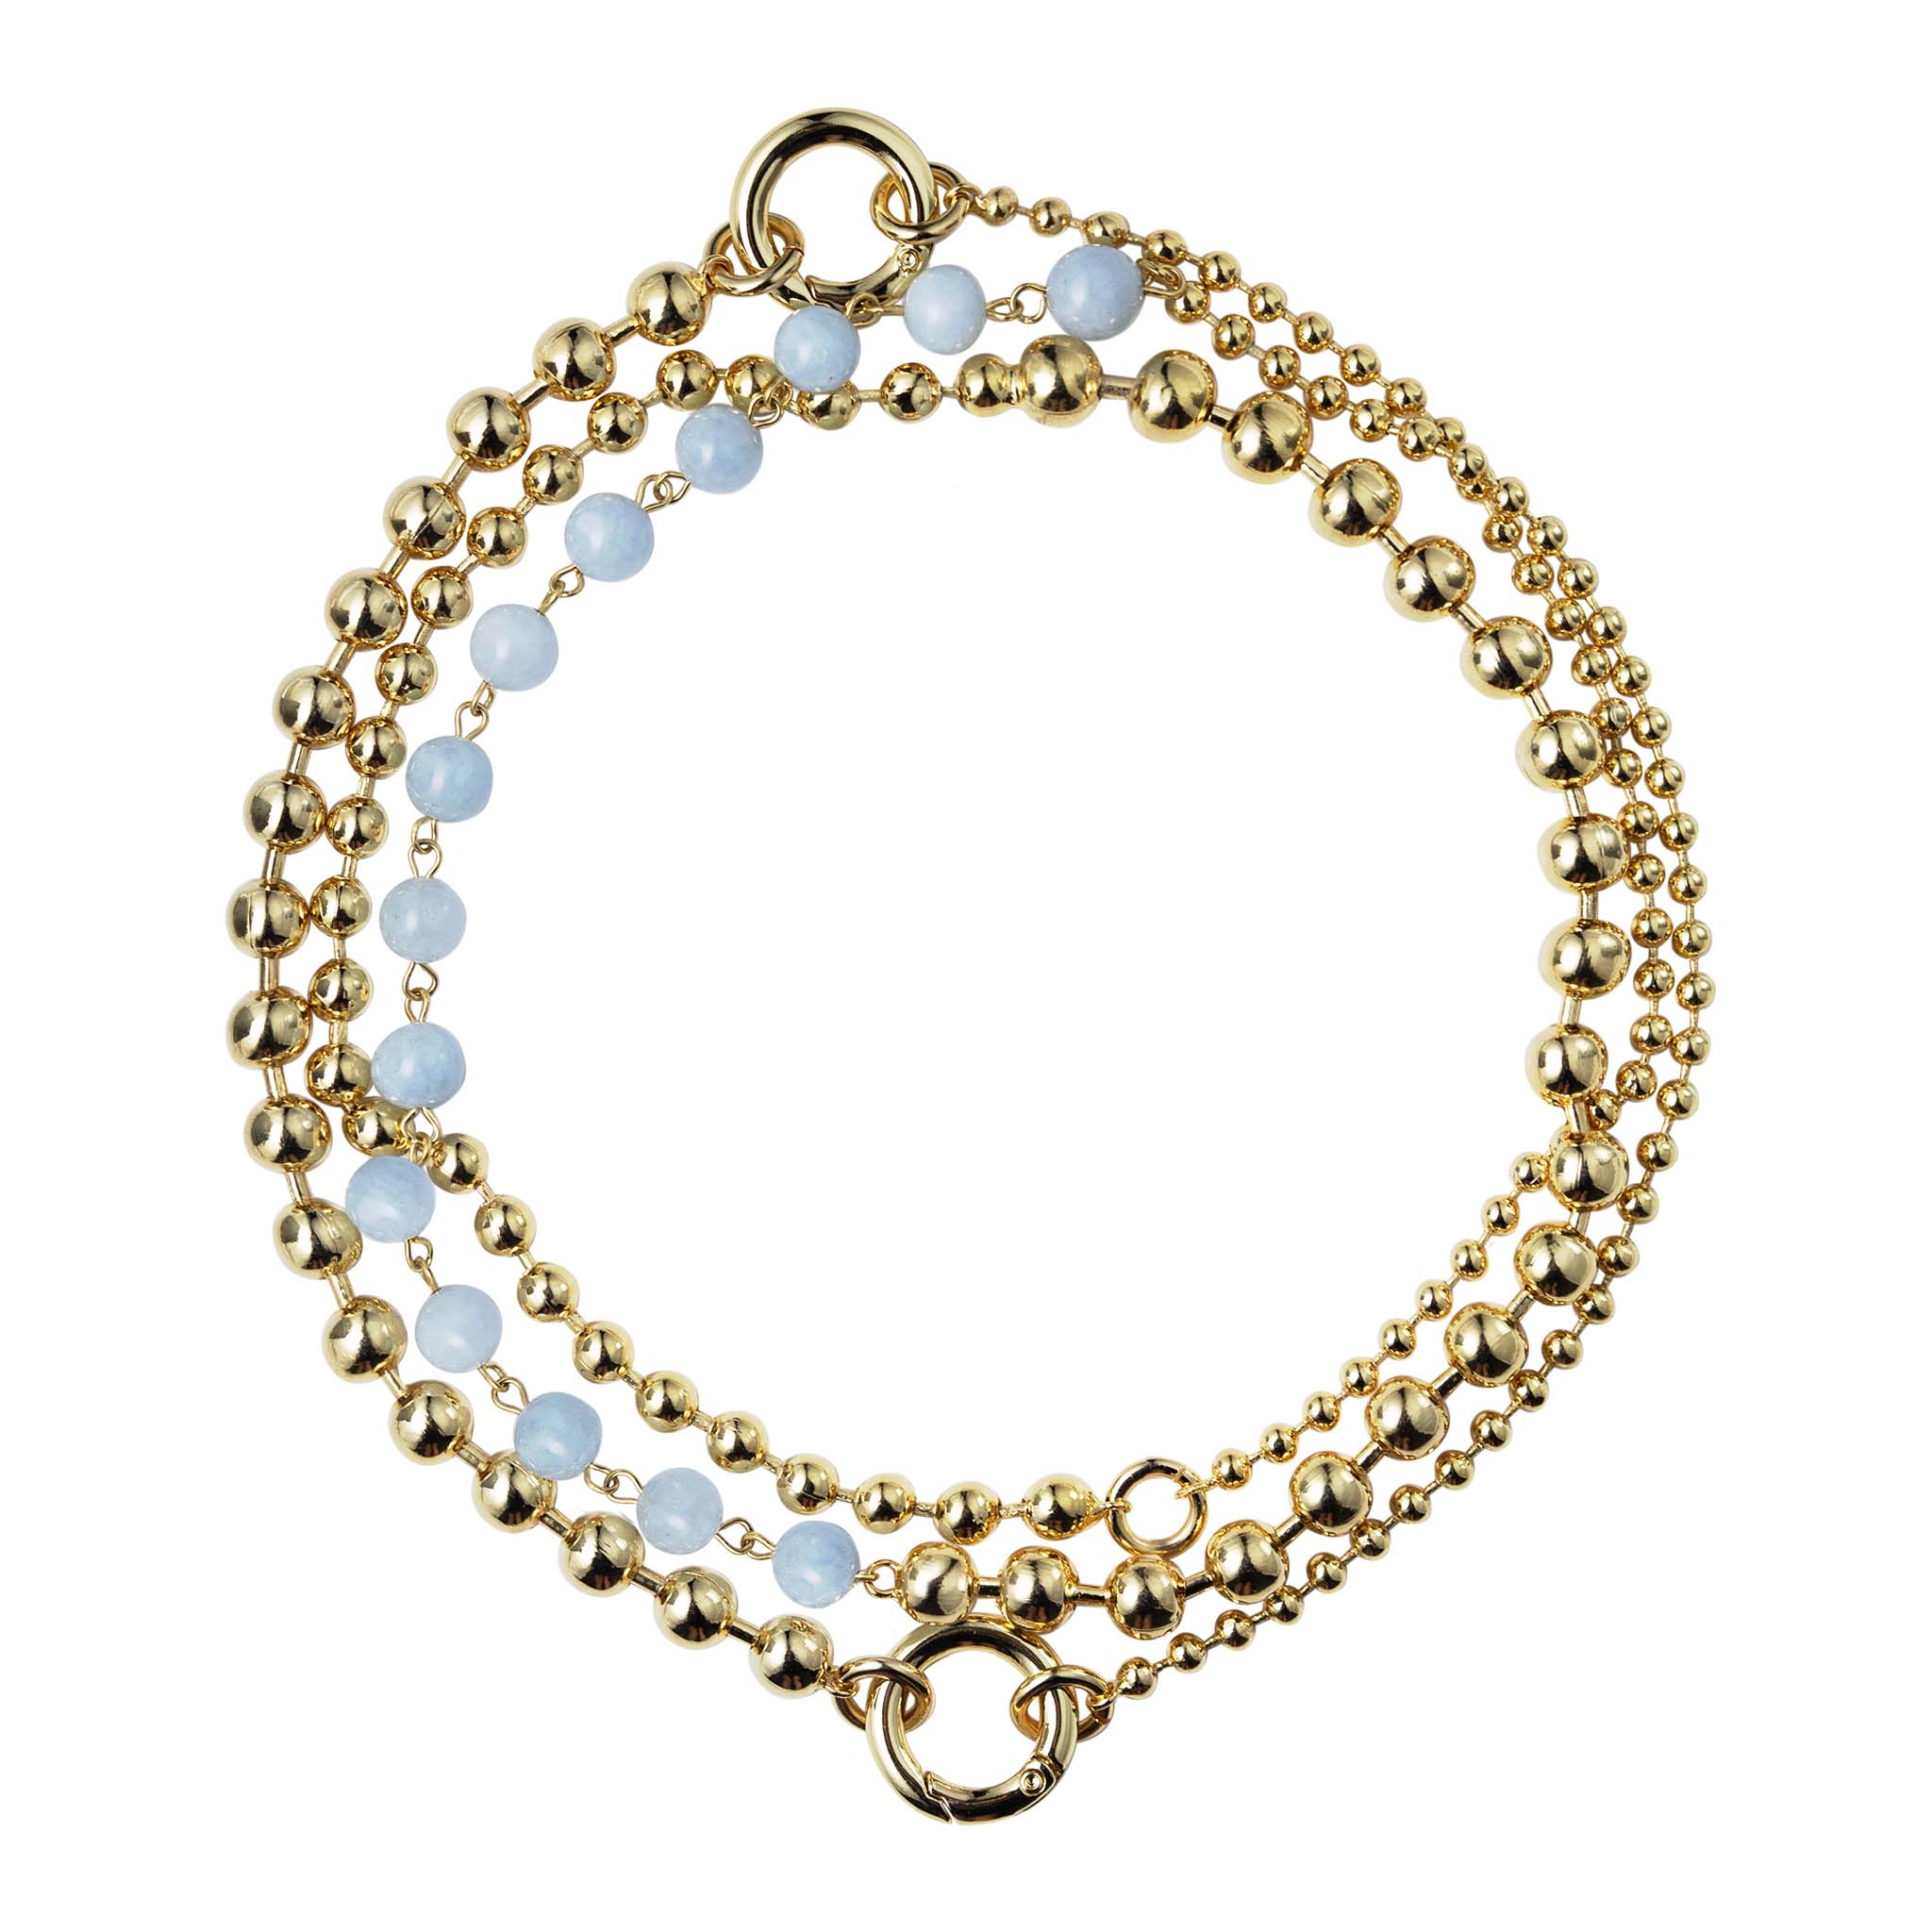 Transformer necklace with aquamarine